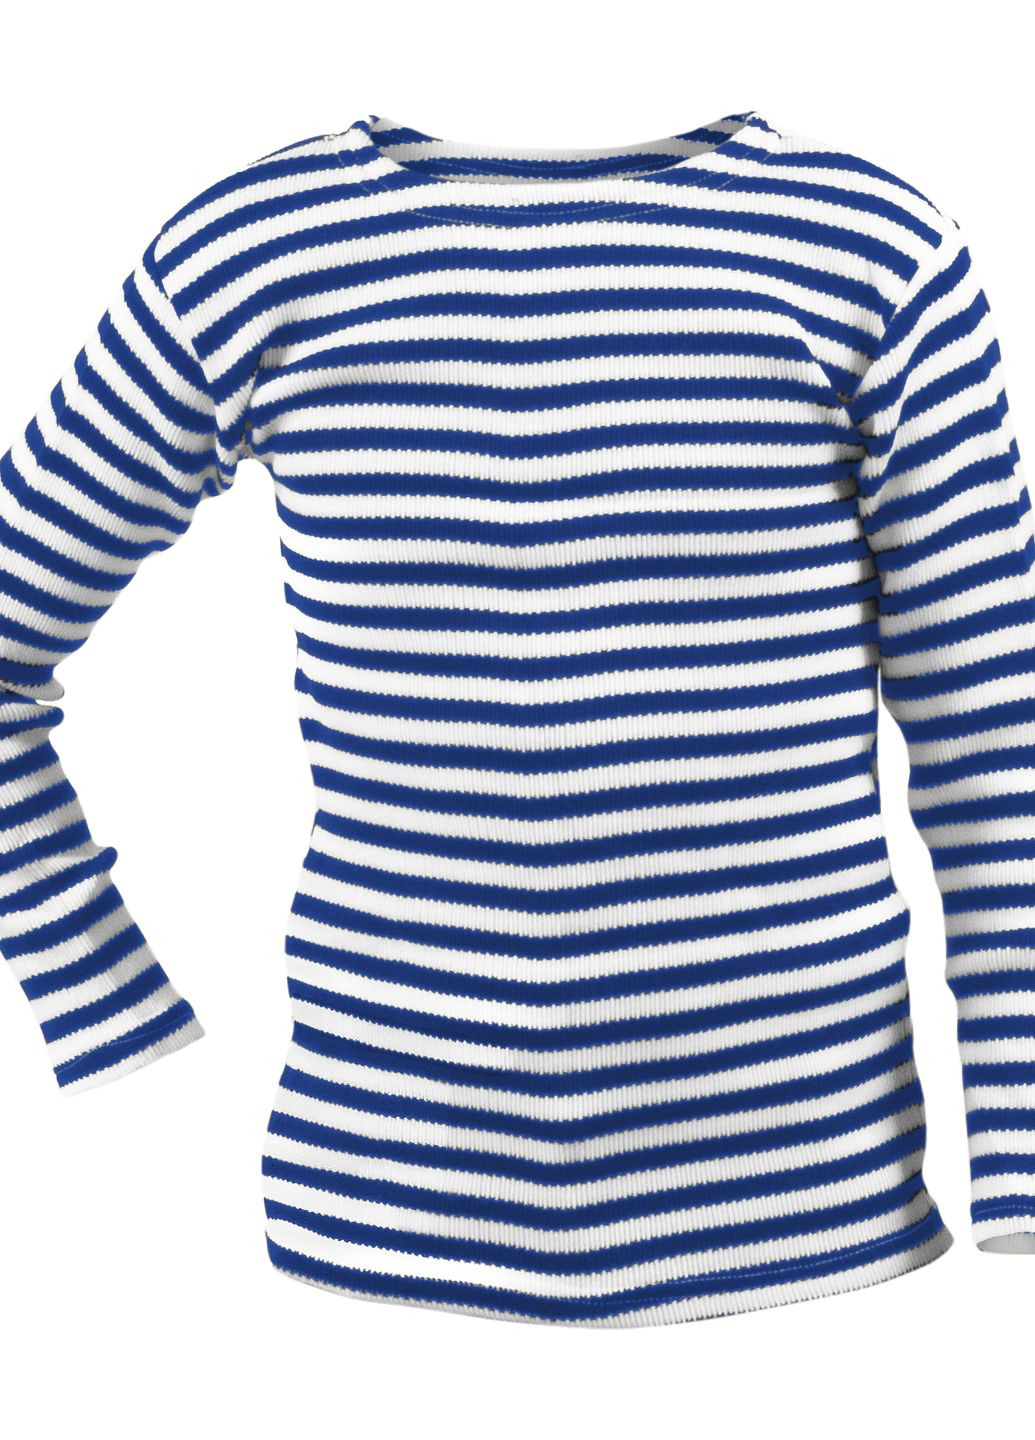 Тельняшка свитер десантная тёплая вязаная Голубая полоска Одеські тільняшки (274065825)